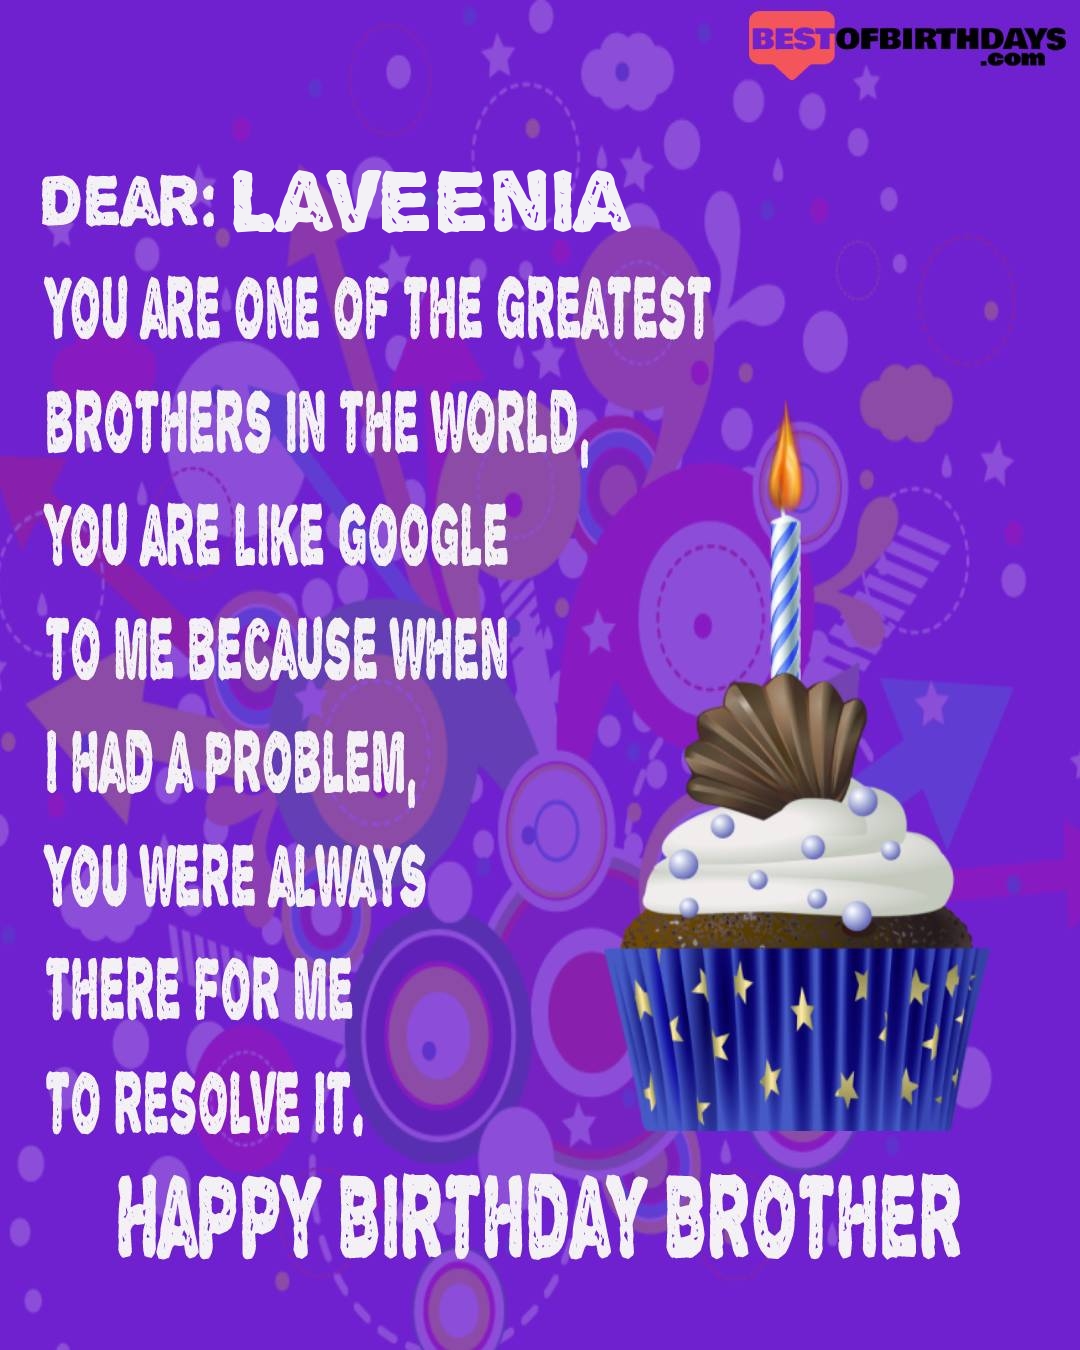 Happy birthday laveenia bhai brother bro